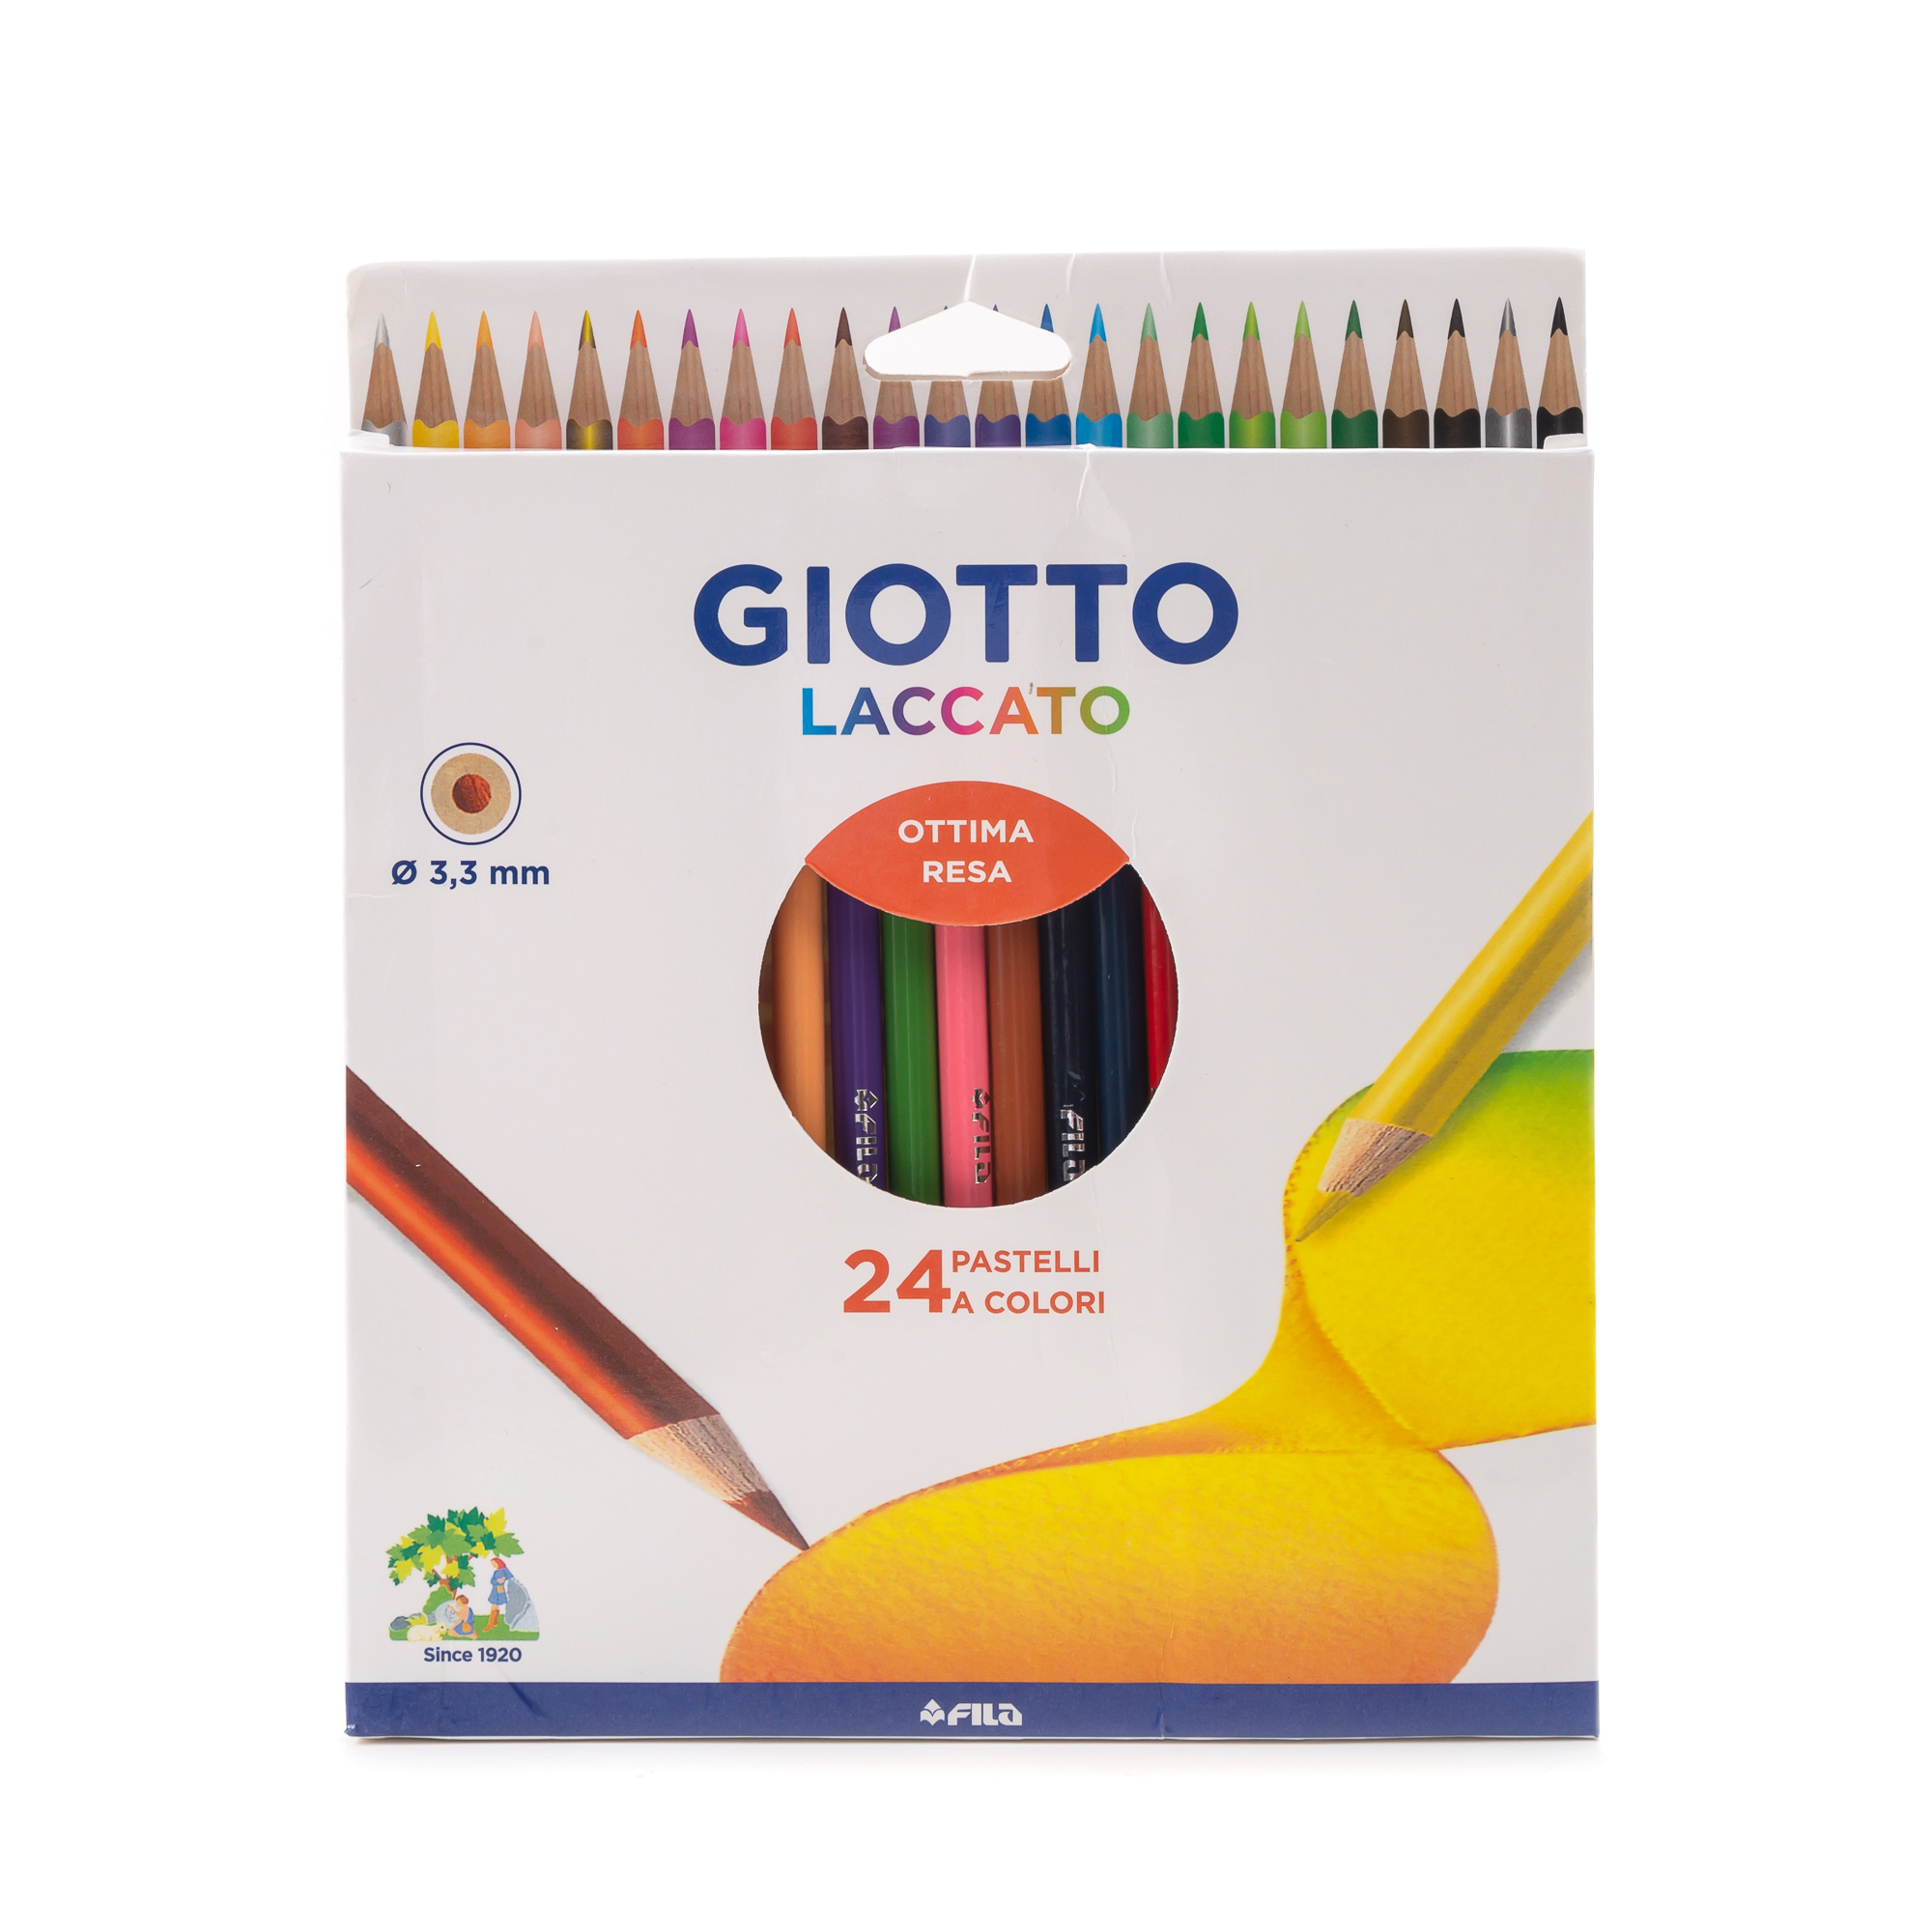 24pcs GIOTTO Colors Pencils,Crayola Colored Pastels Pencils Set